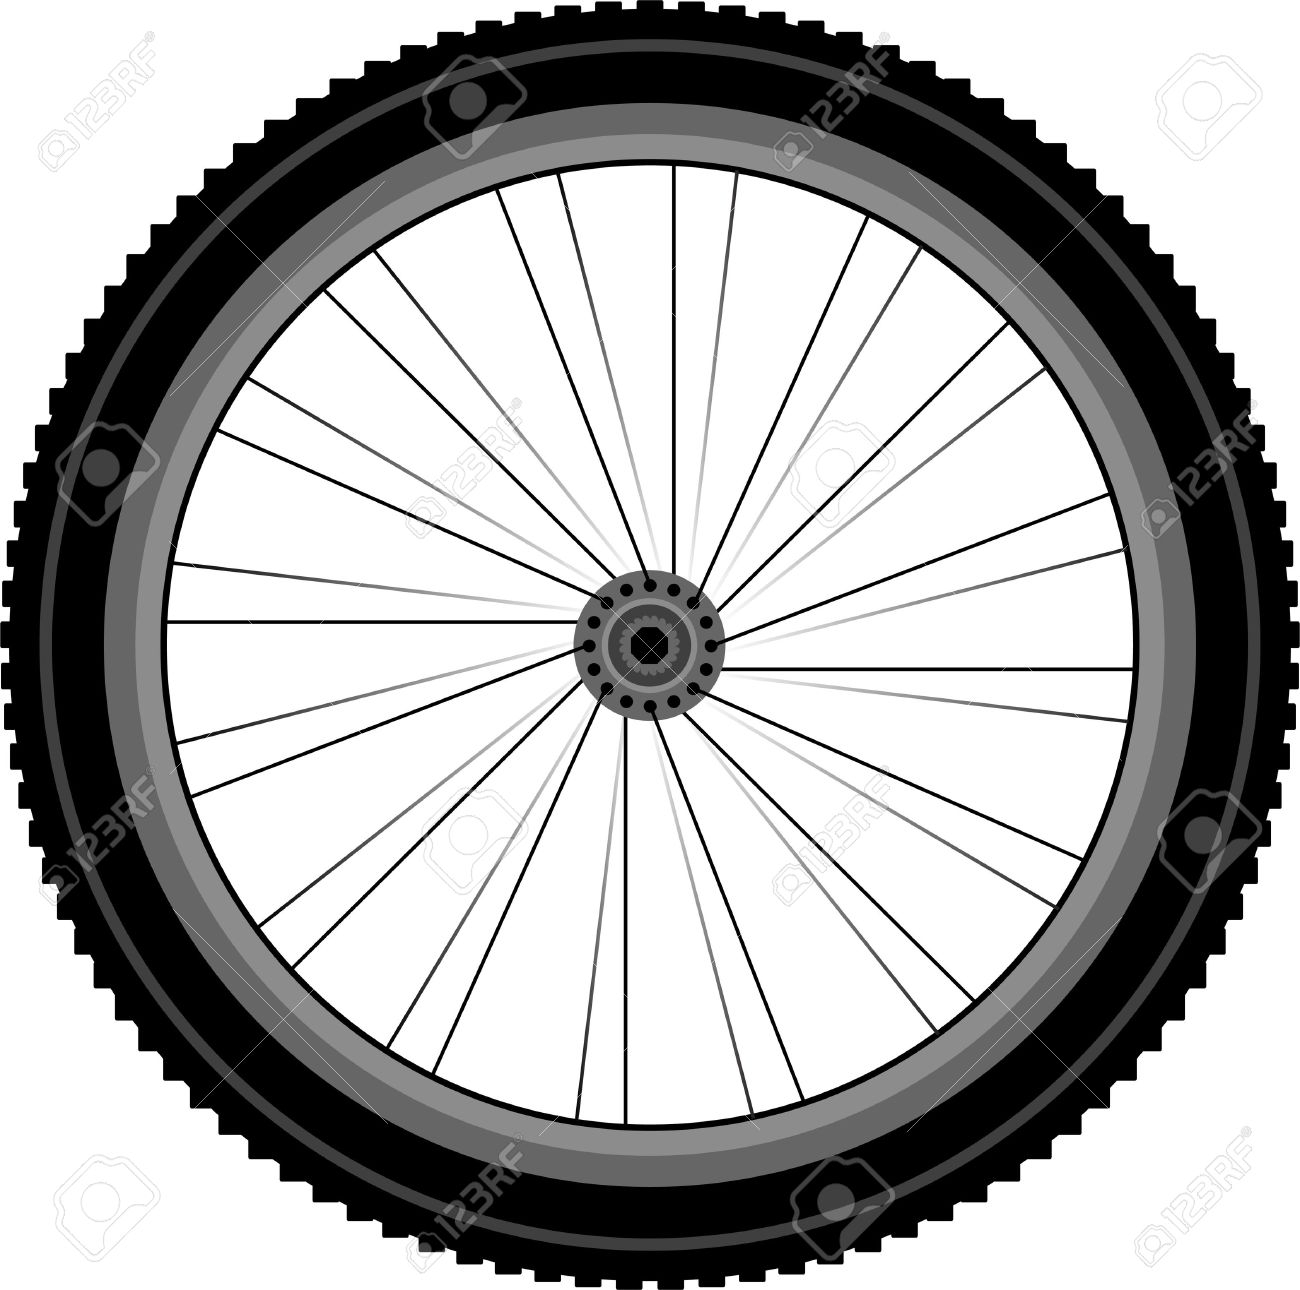 Similiar Bicycle Wheel Clip Art Keywords.